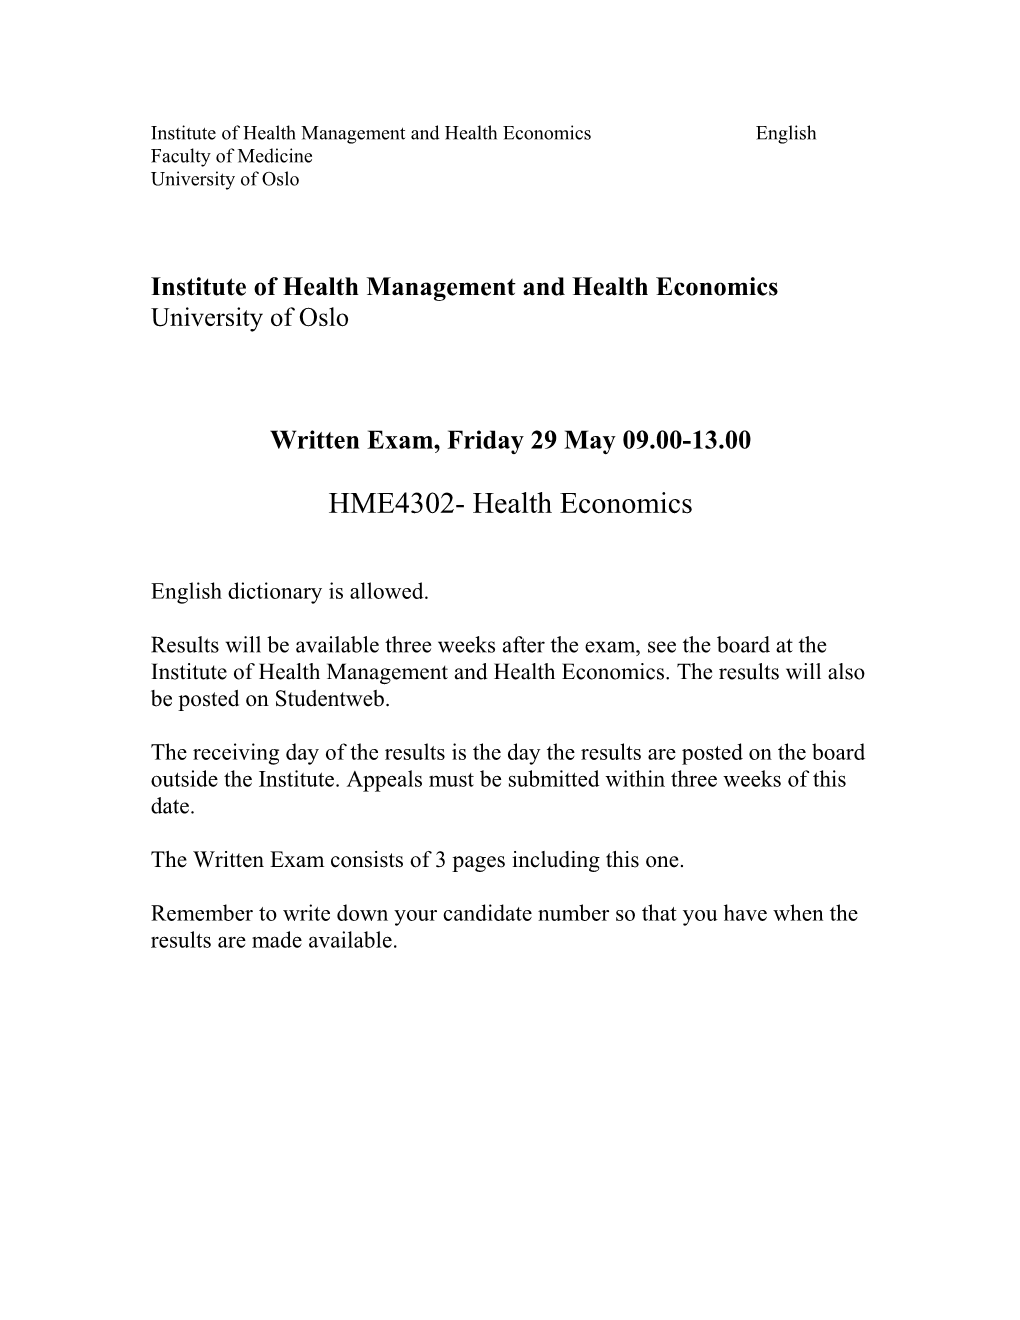 Exam Spring 2009 HME 4302 (Health Economics)